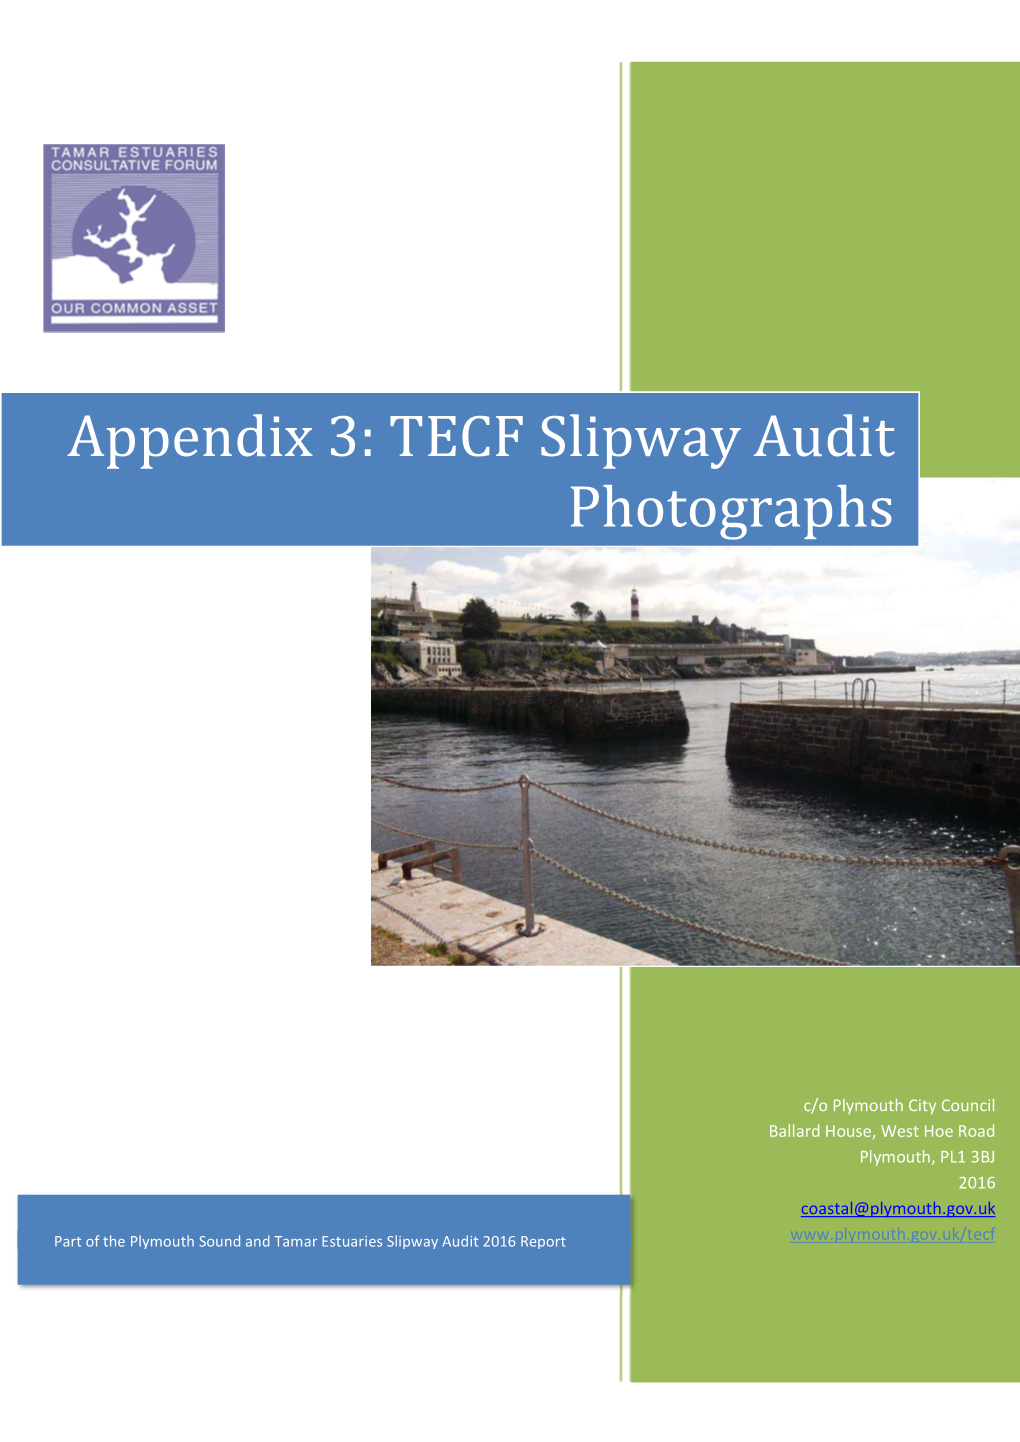 TECF Slipway Audit Photographs